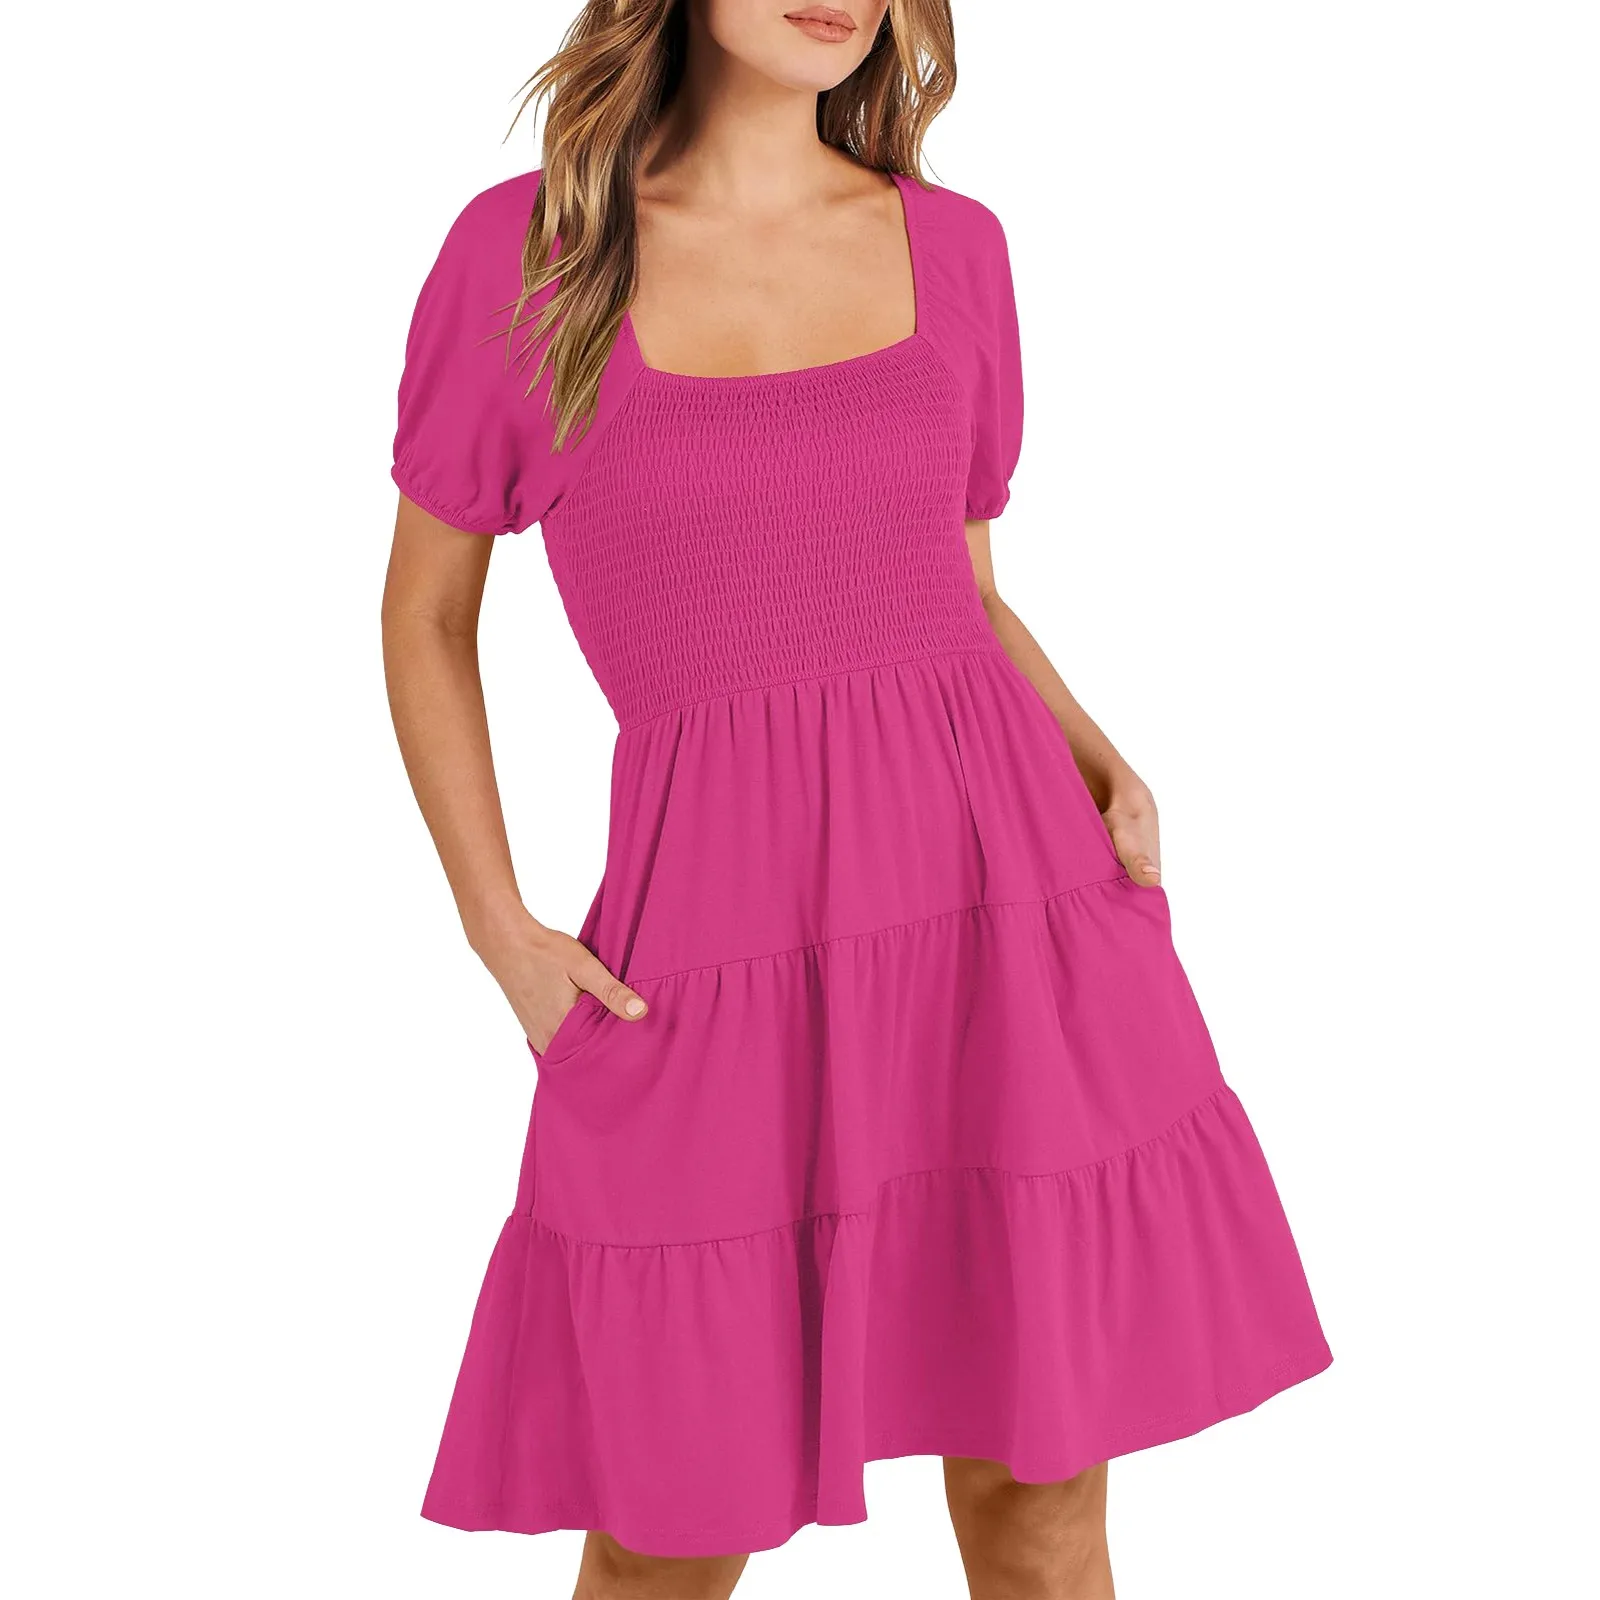 

Women's Summer Dresses Casual Sundress Loose Flowy Short Sleeve Dresses Slim-Type Simple Elegant Party Dress فساتين طويلة